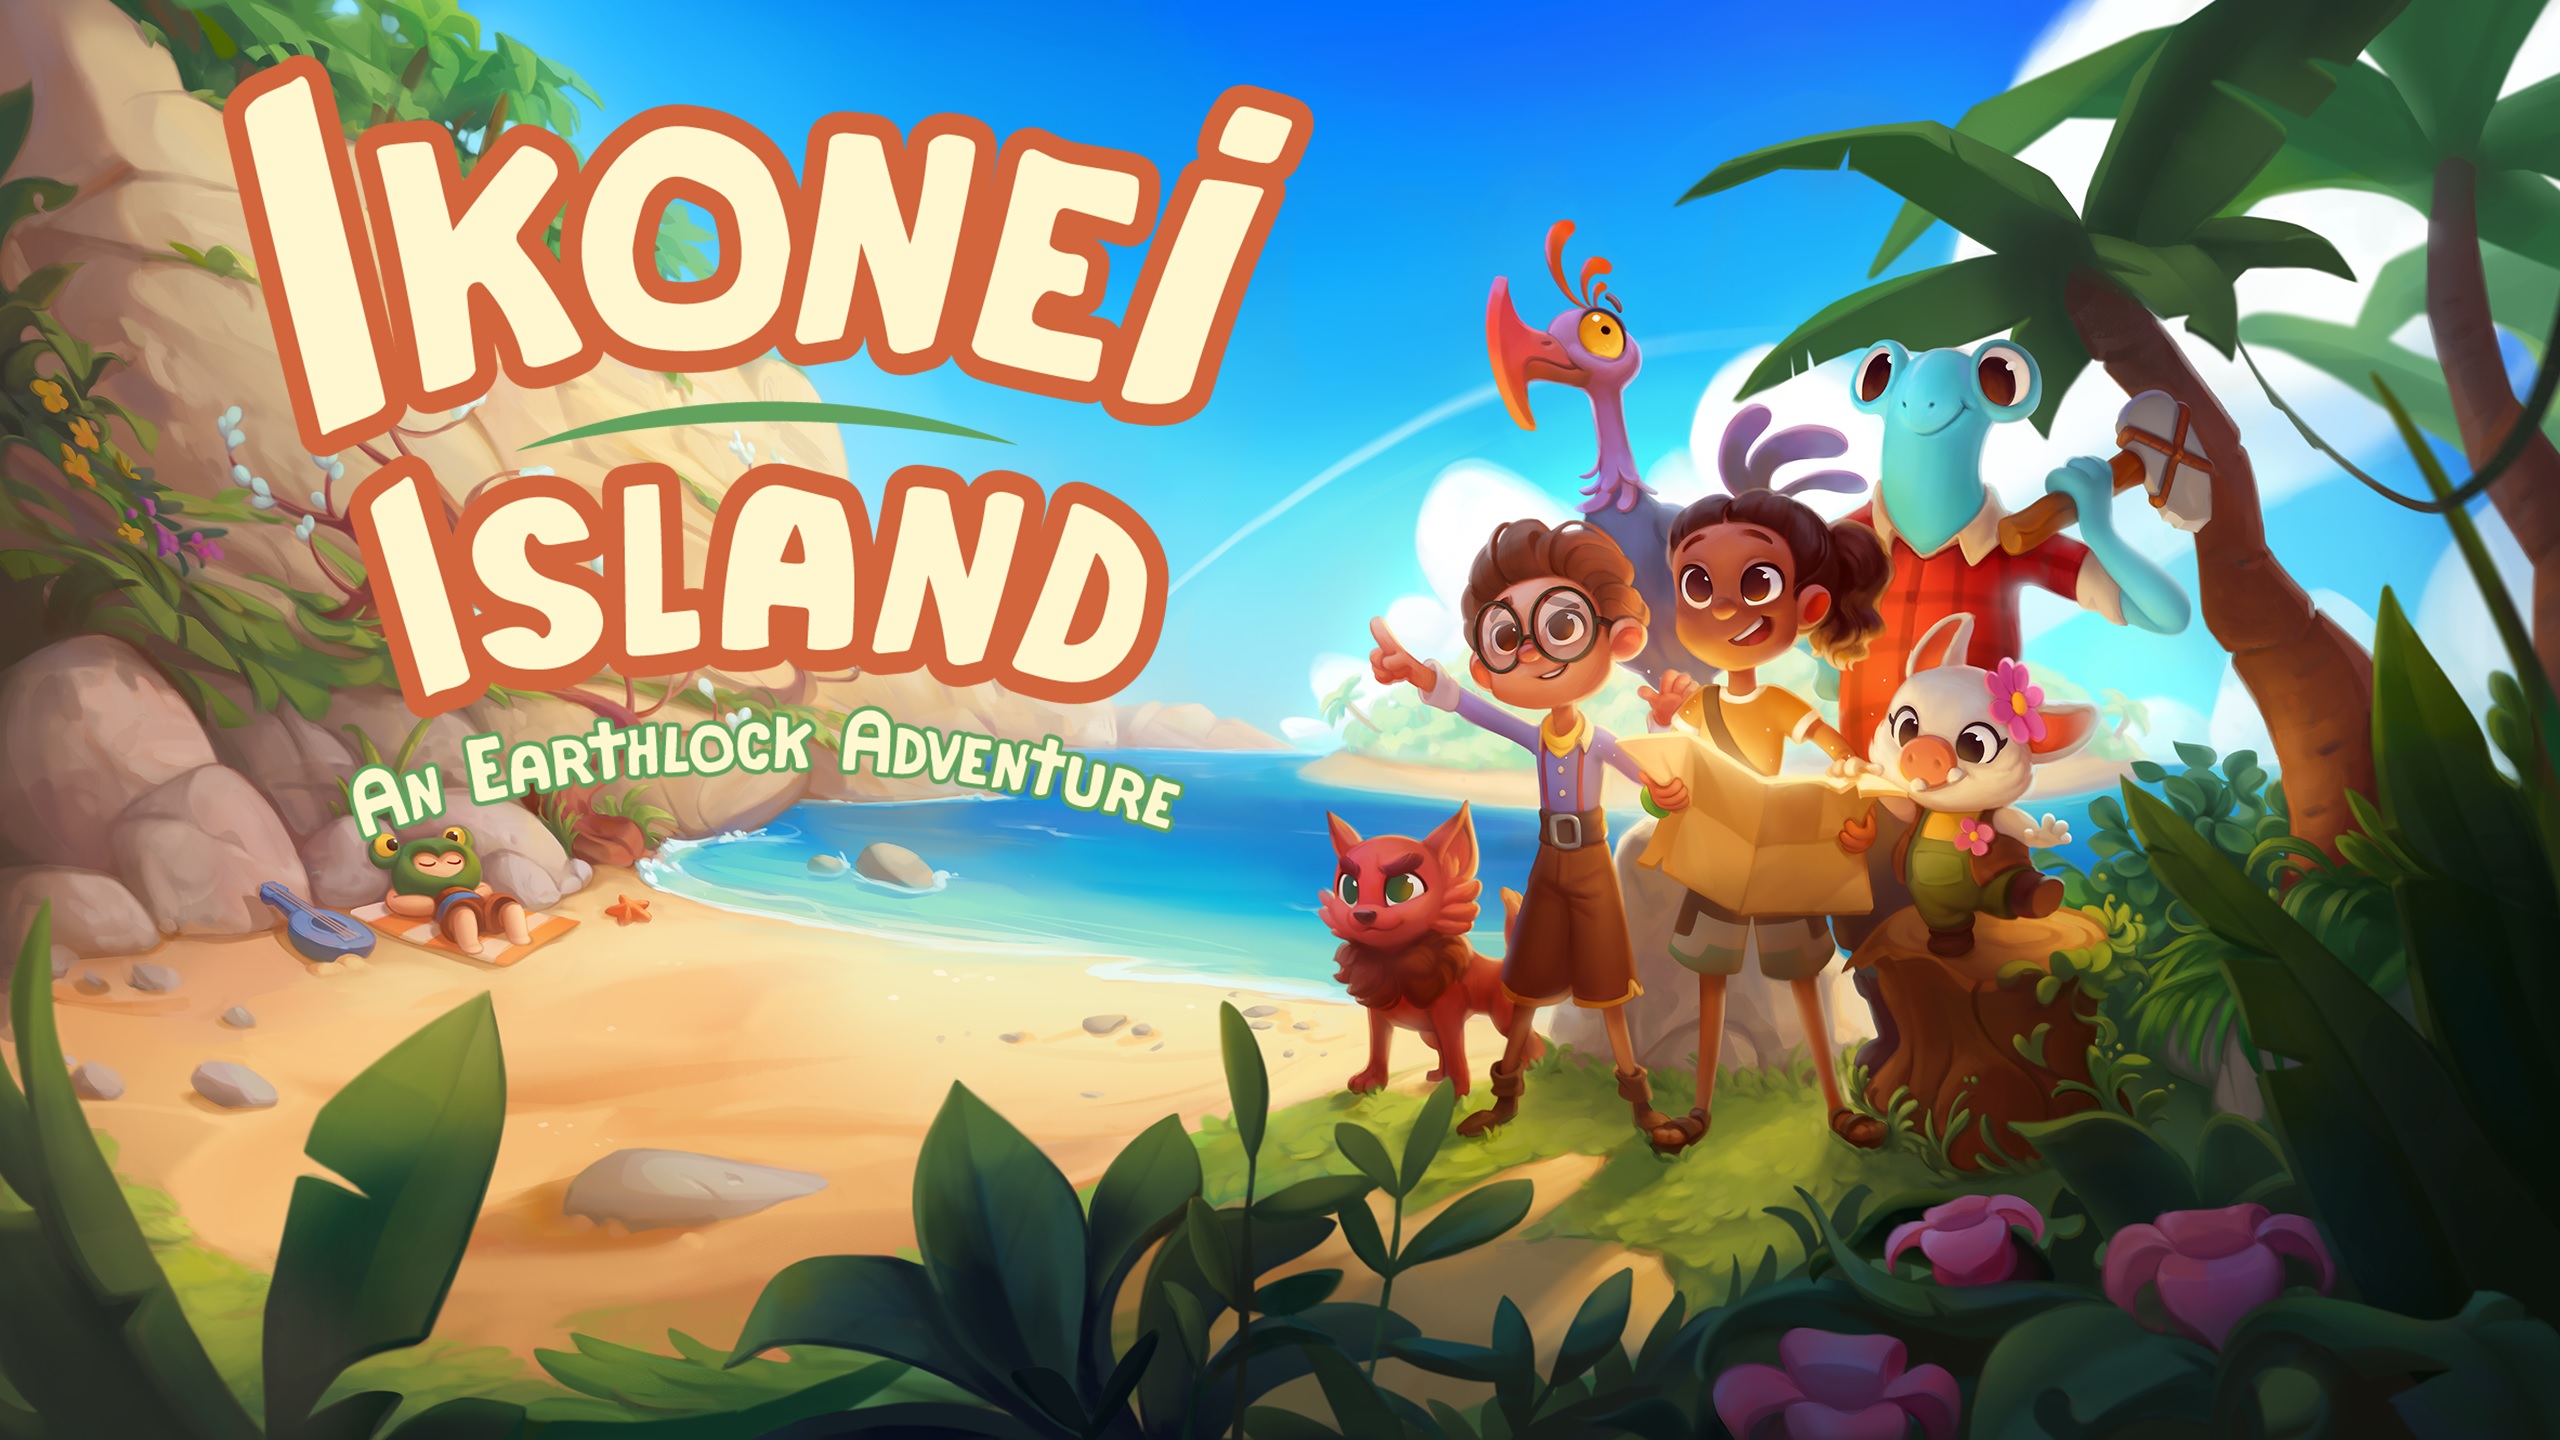 Critique: Ikonei Island: An Earthlock Adventure